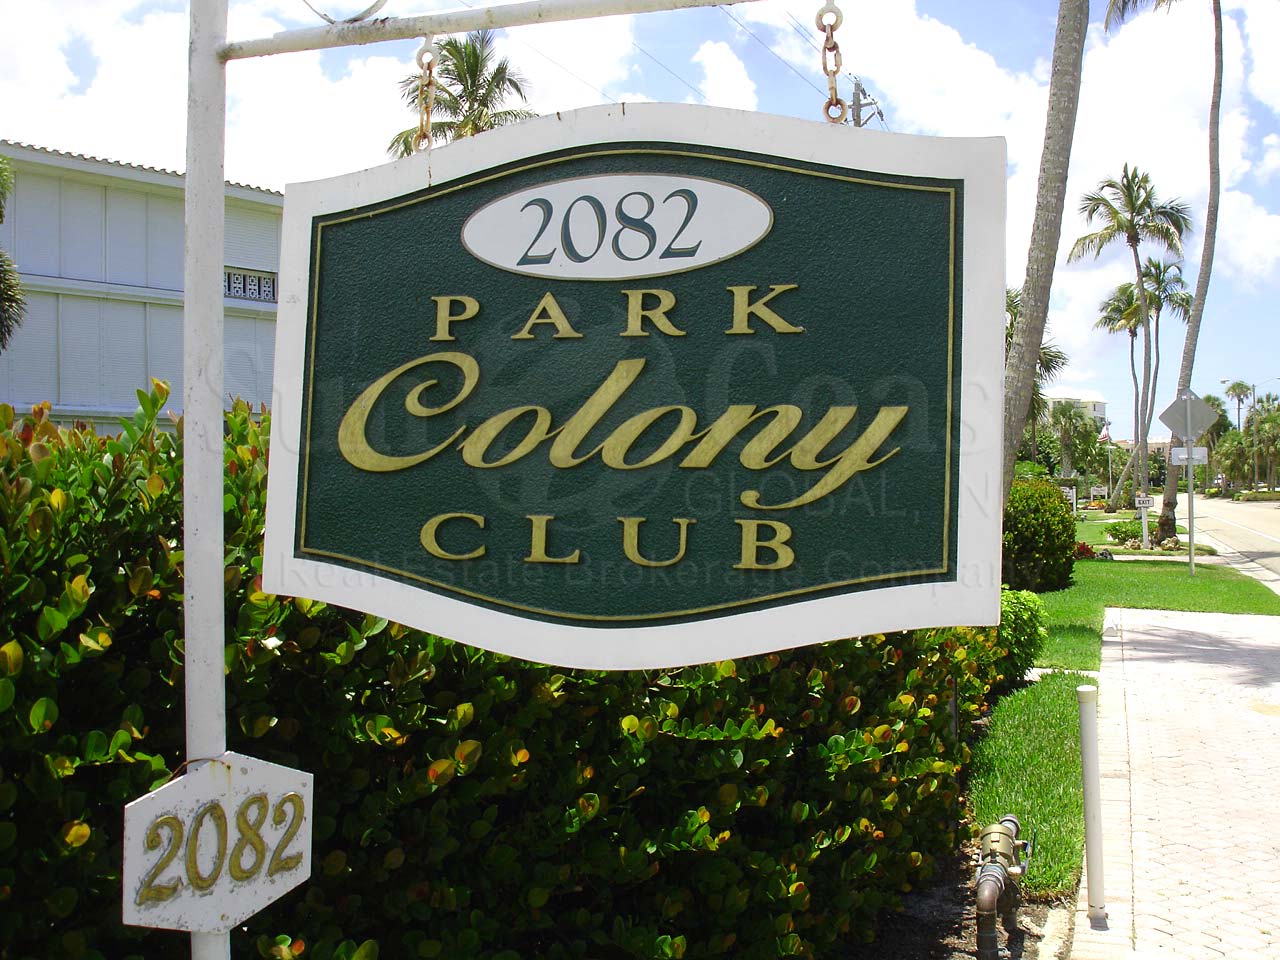 Park Colony Club Signage